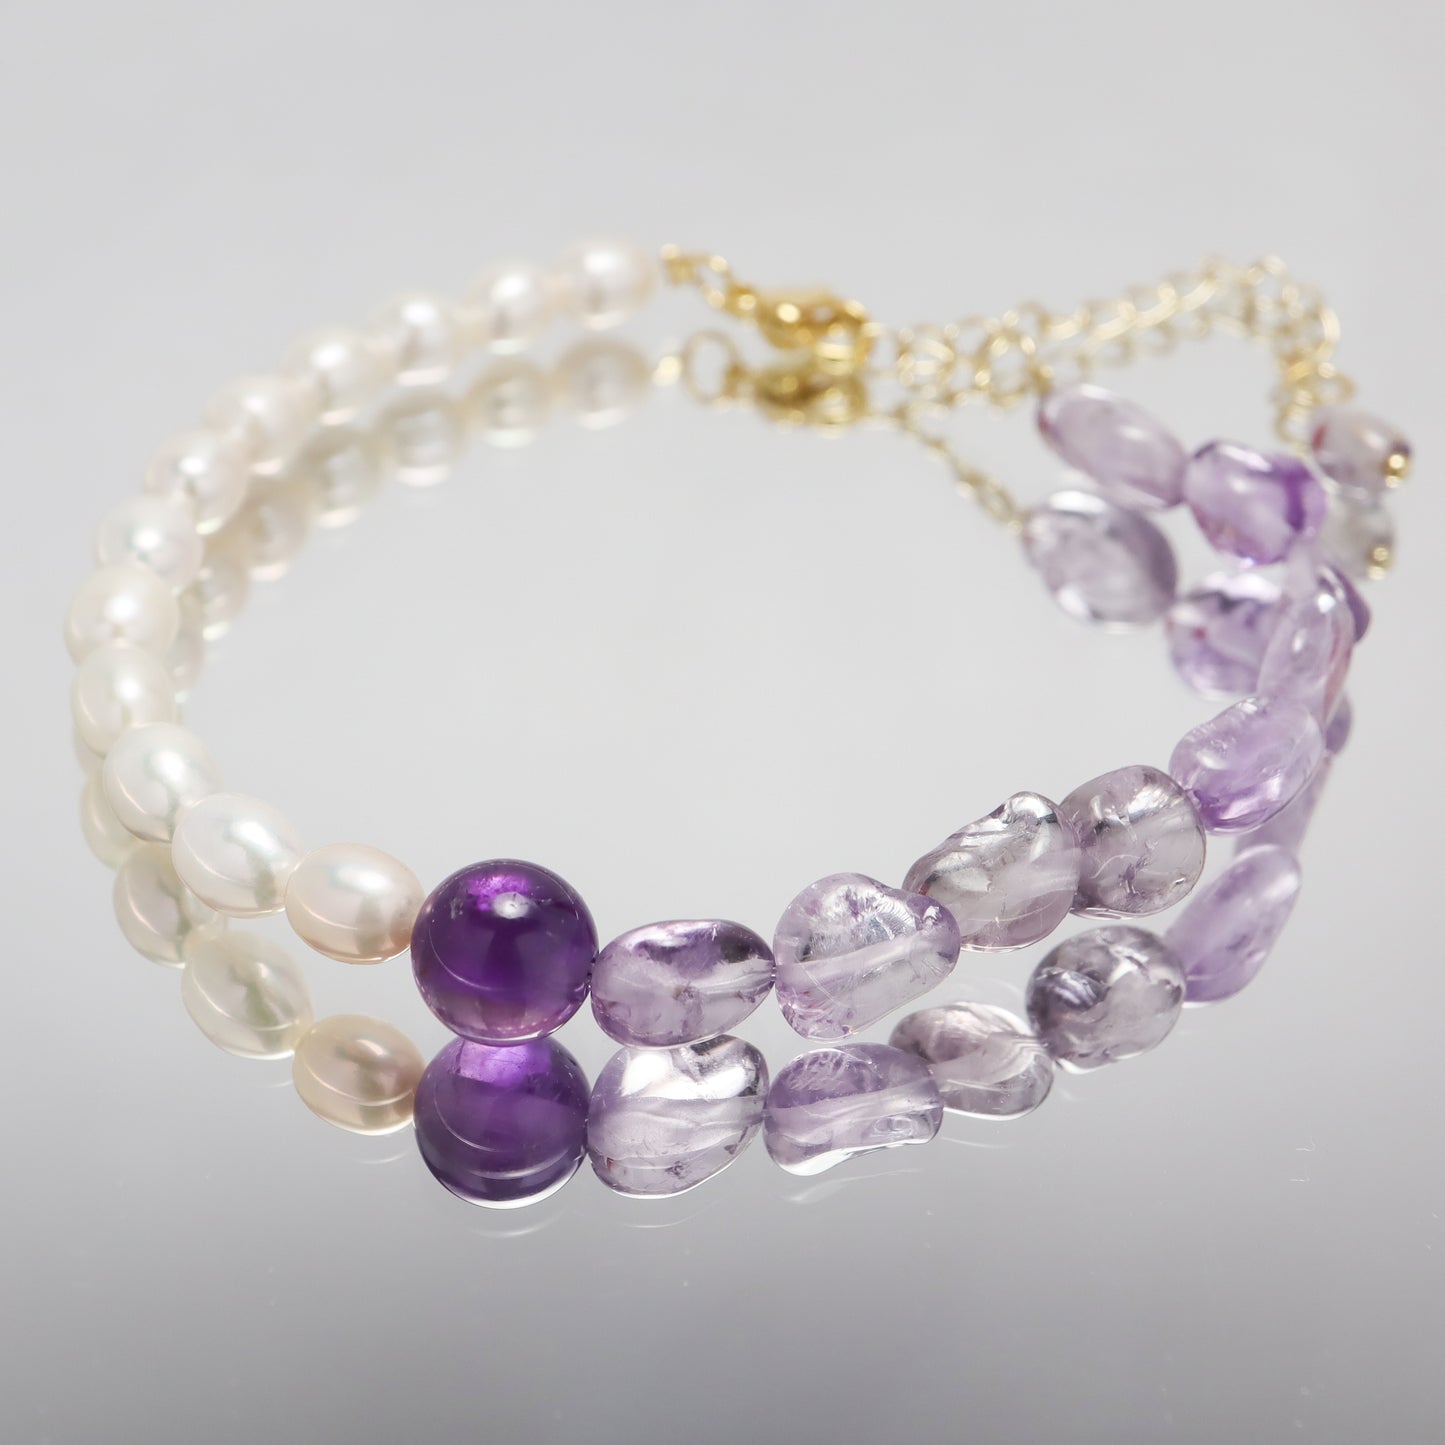 Diana Blessing - Lavender Amethyst & Freshwater Pearl Bracelet with Hook Lock